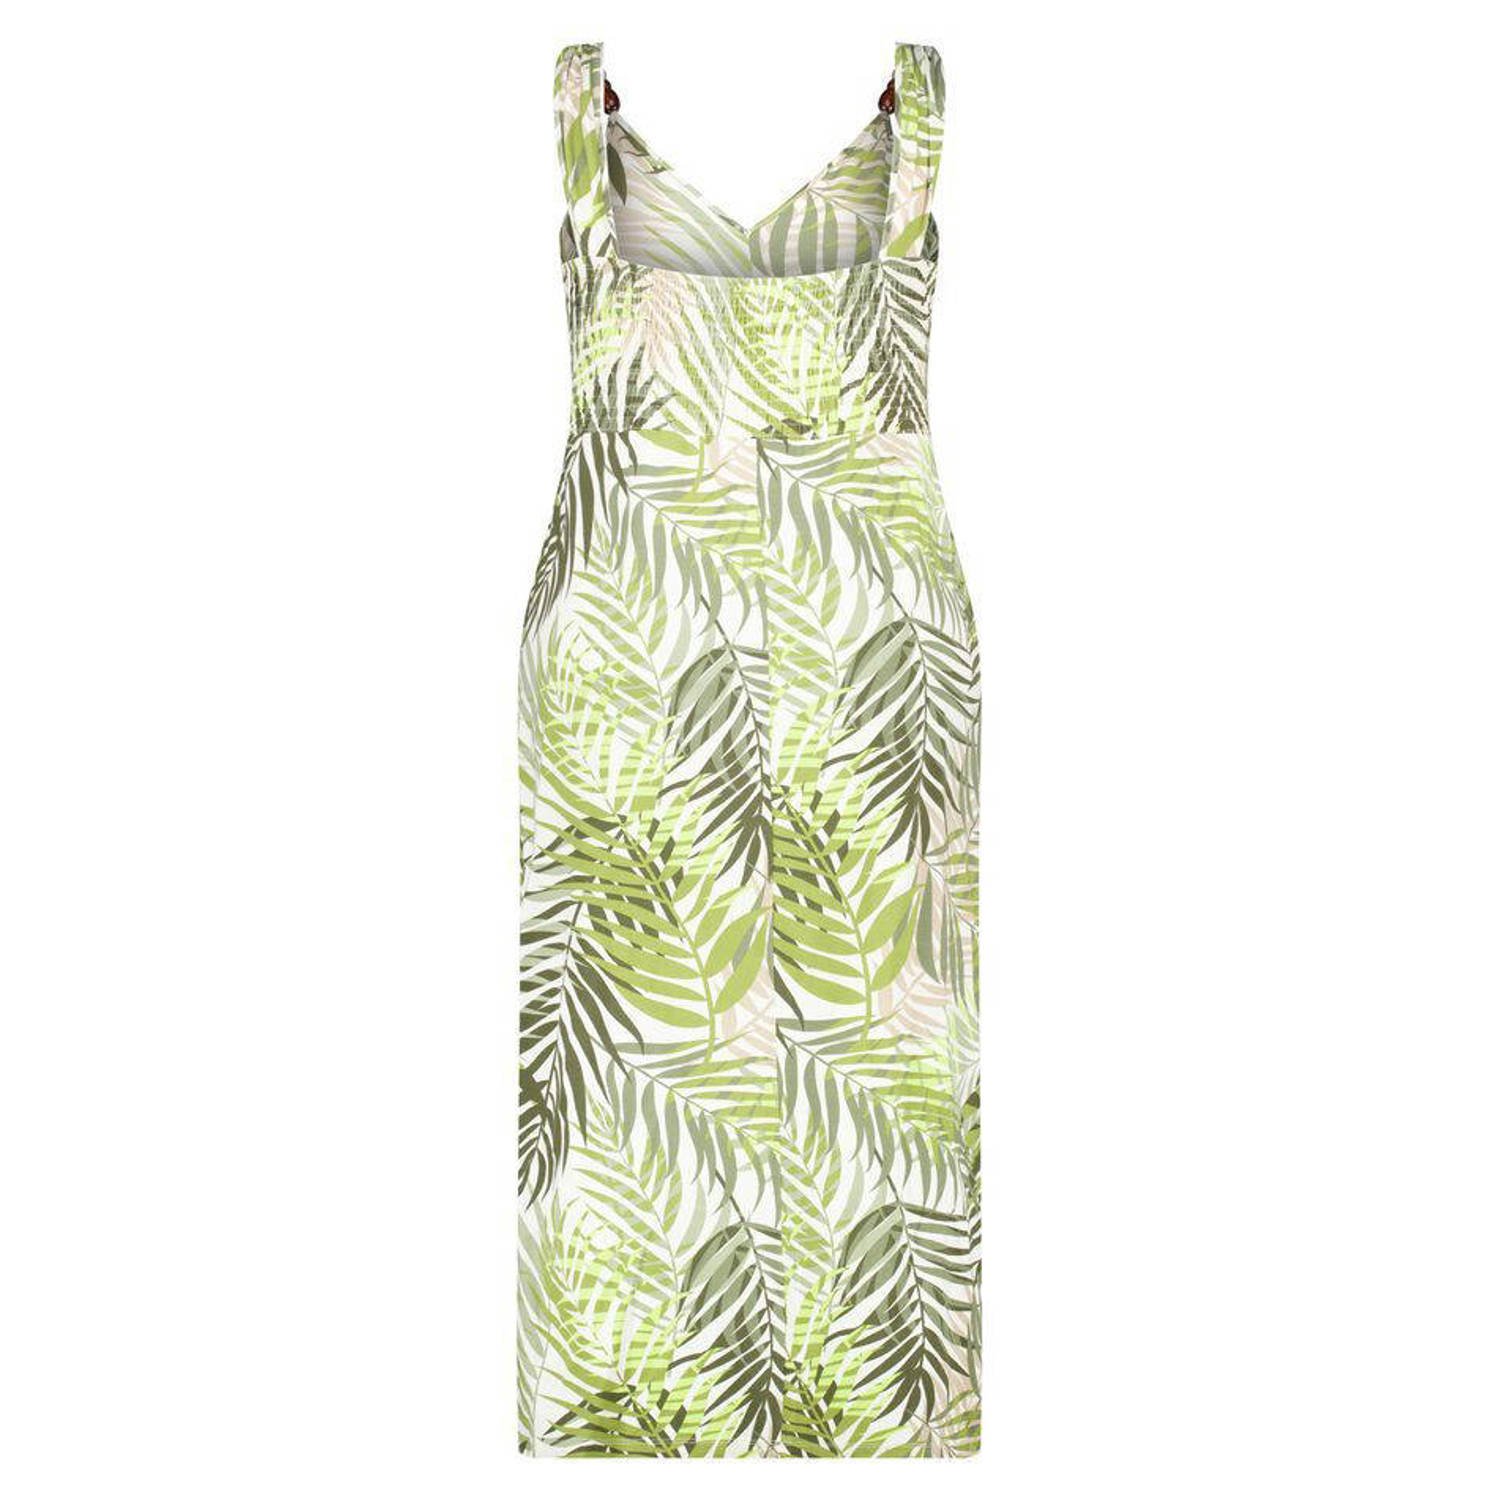 MS Mode jurk met bladprint groen ecru